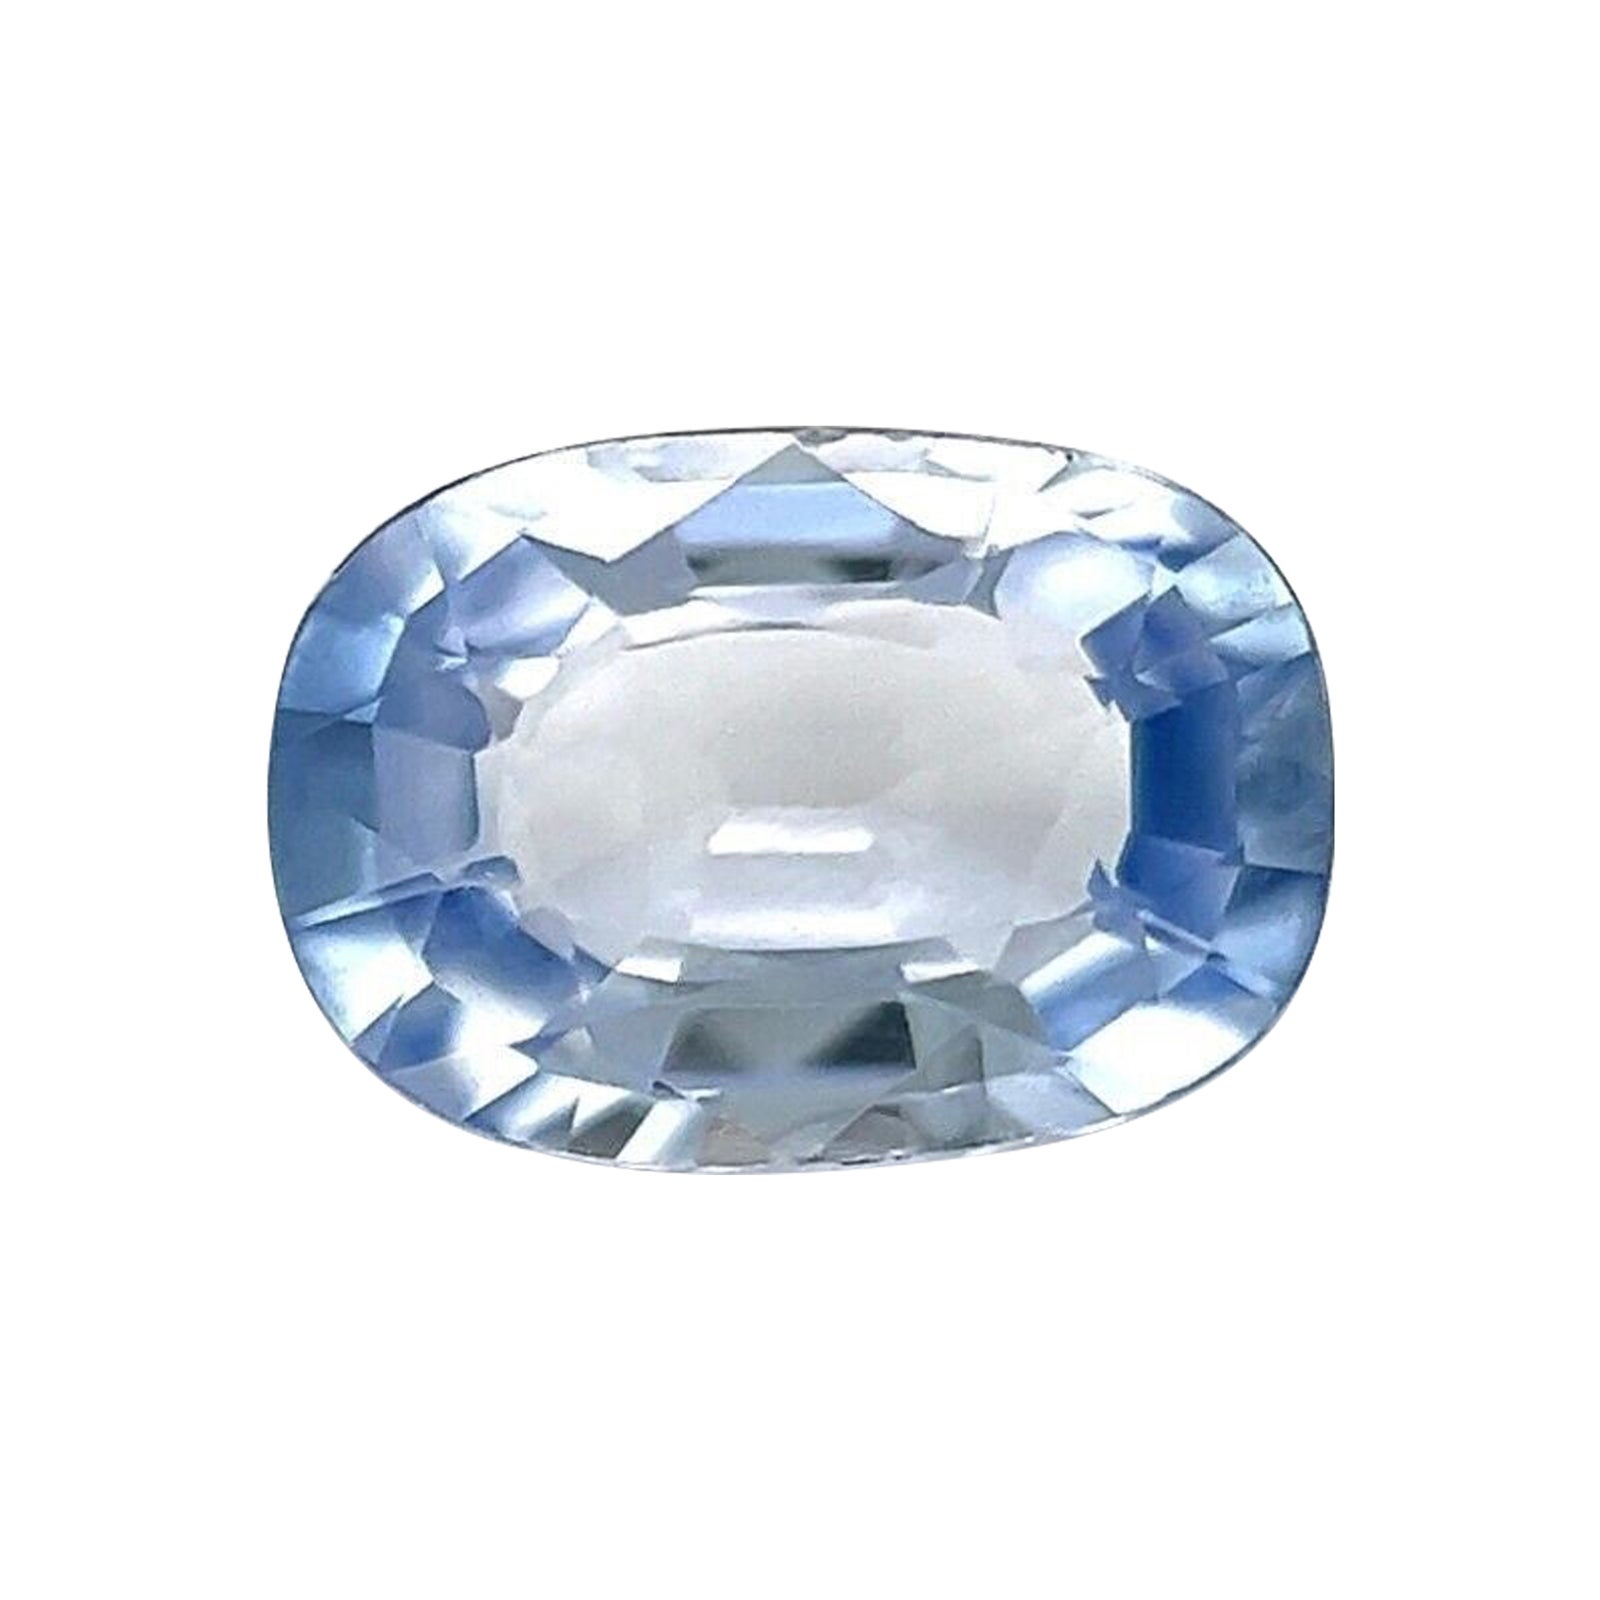 Fine 1.01ct Light Blue Ceylon Sapphire Cushion Cut Loose Rare Gem VS